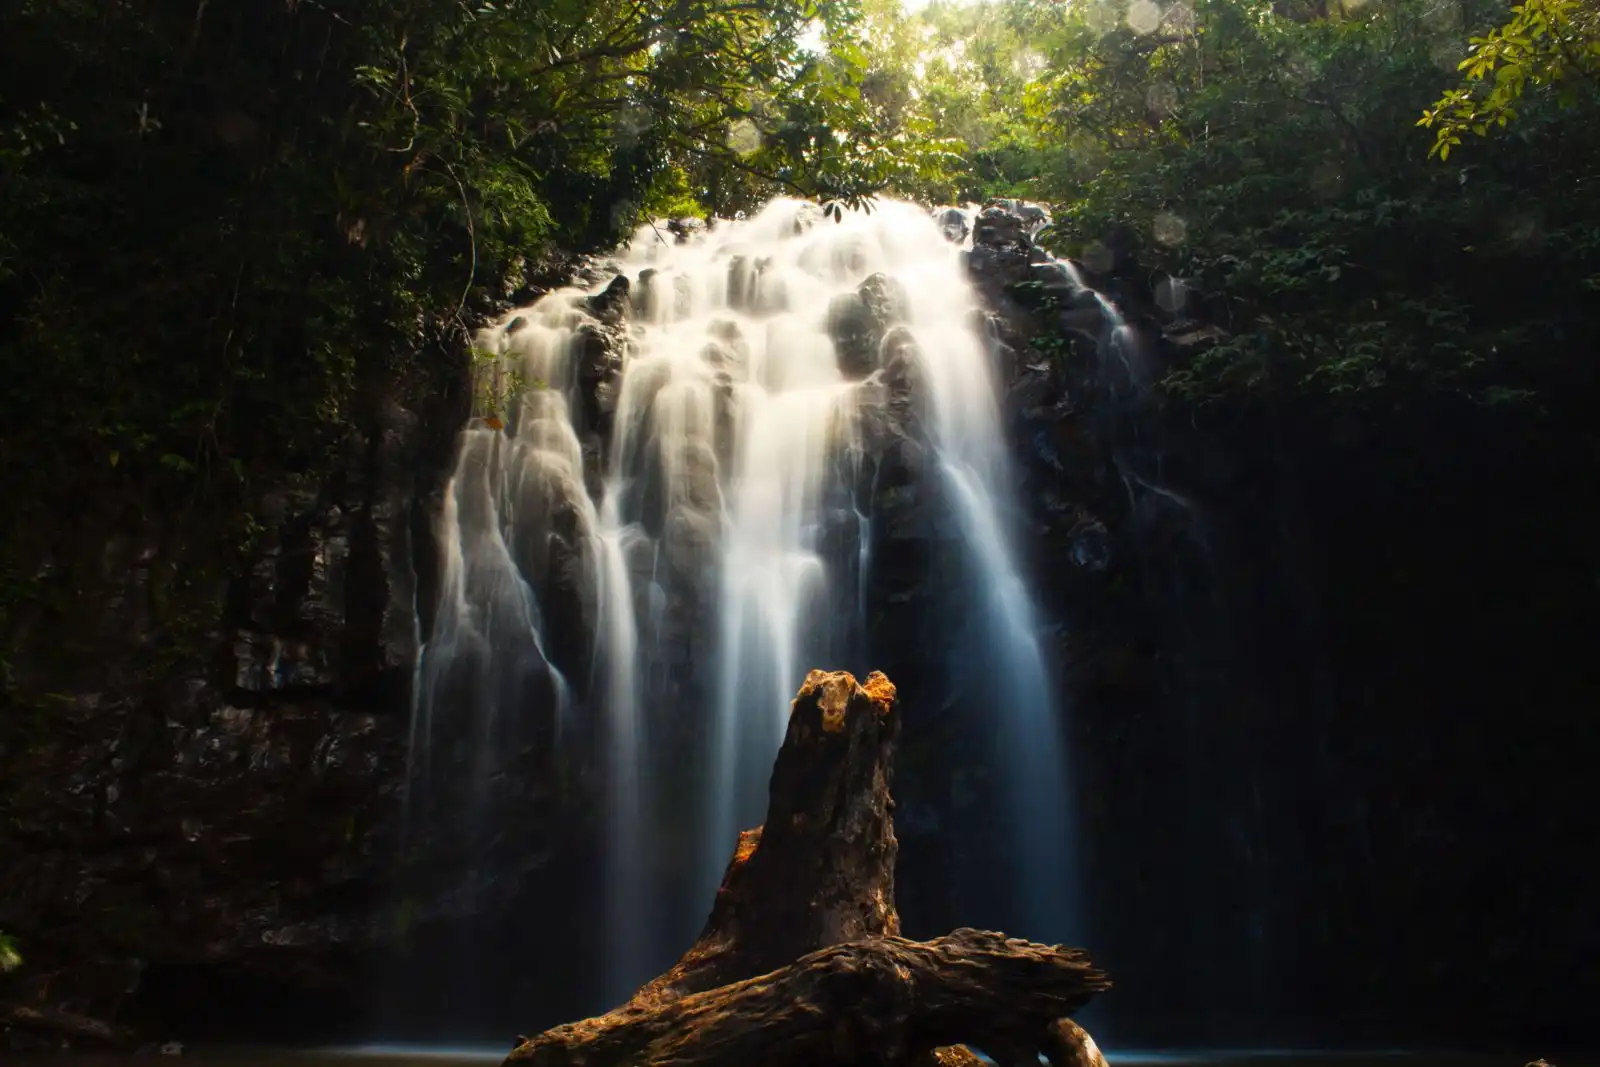 Ellinjaa Falls near Cairns